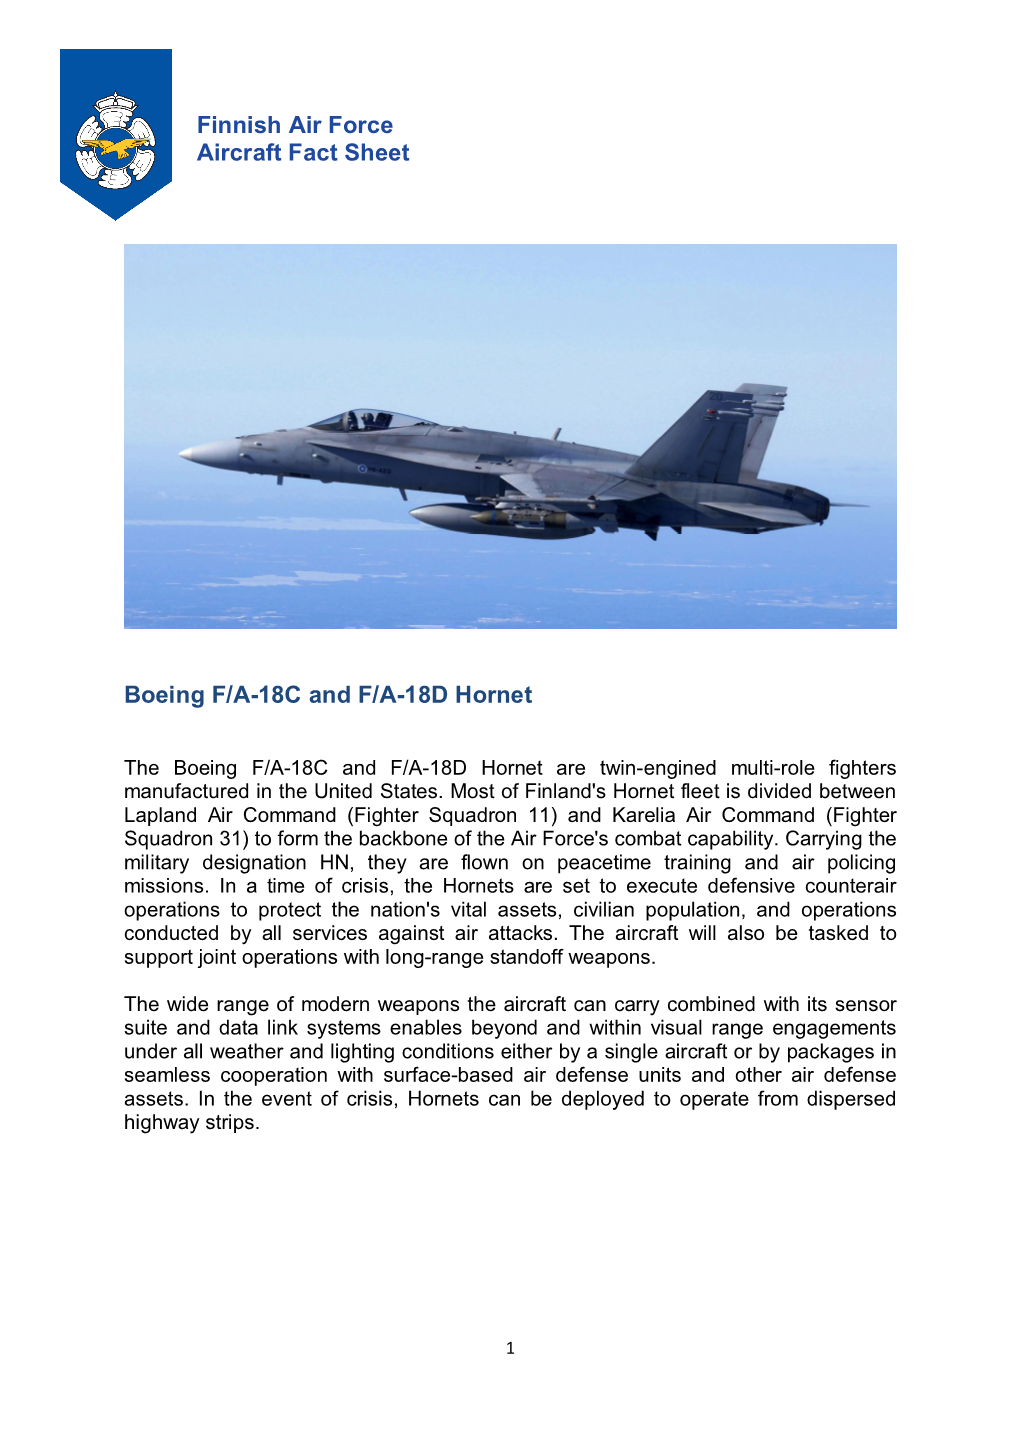 Finnish Air Force Aircraft Fact Sheet Boeing F/A-18C and F/A-18D Hornet